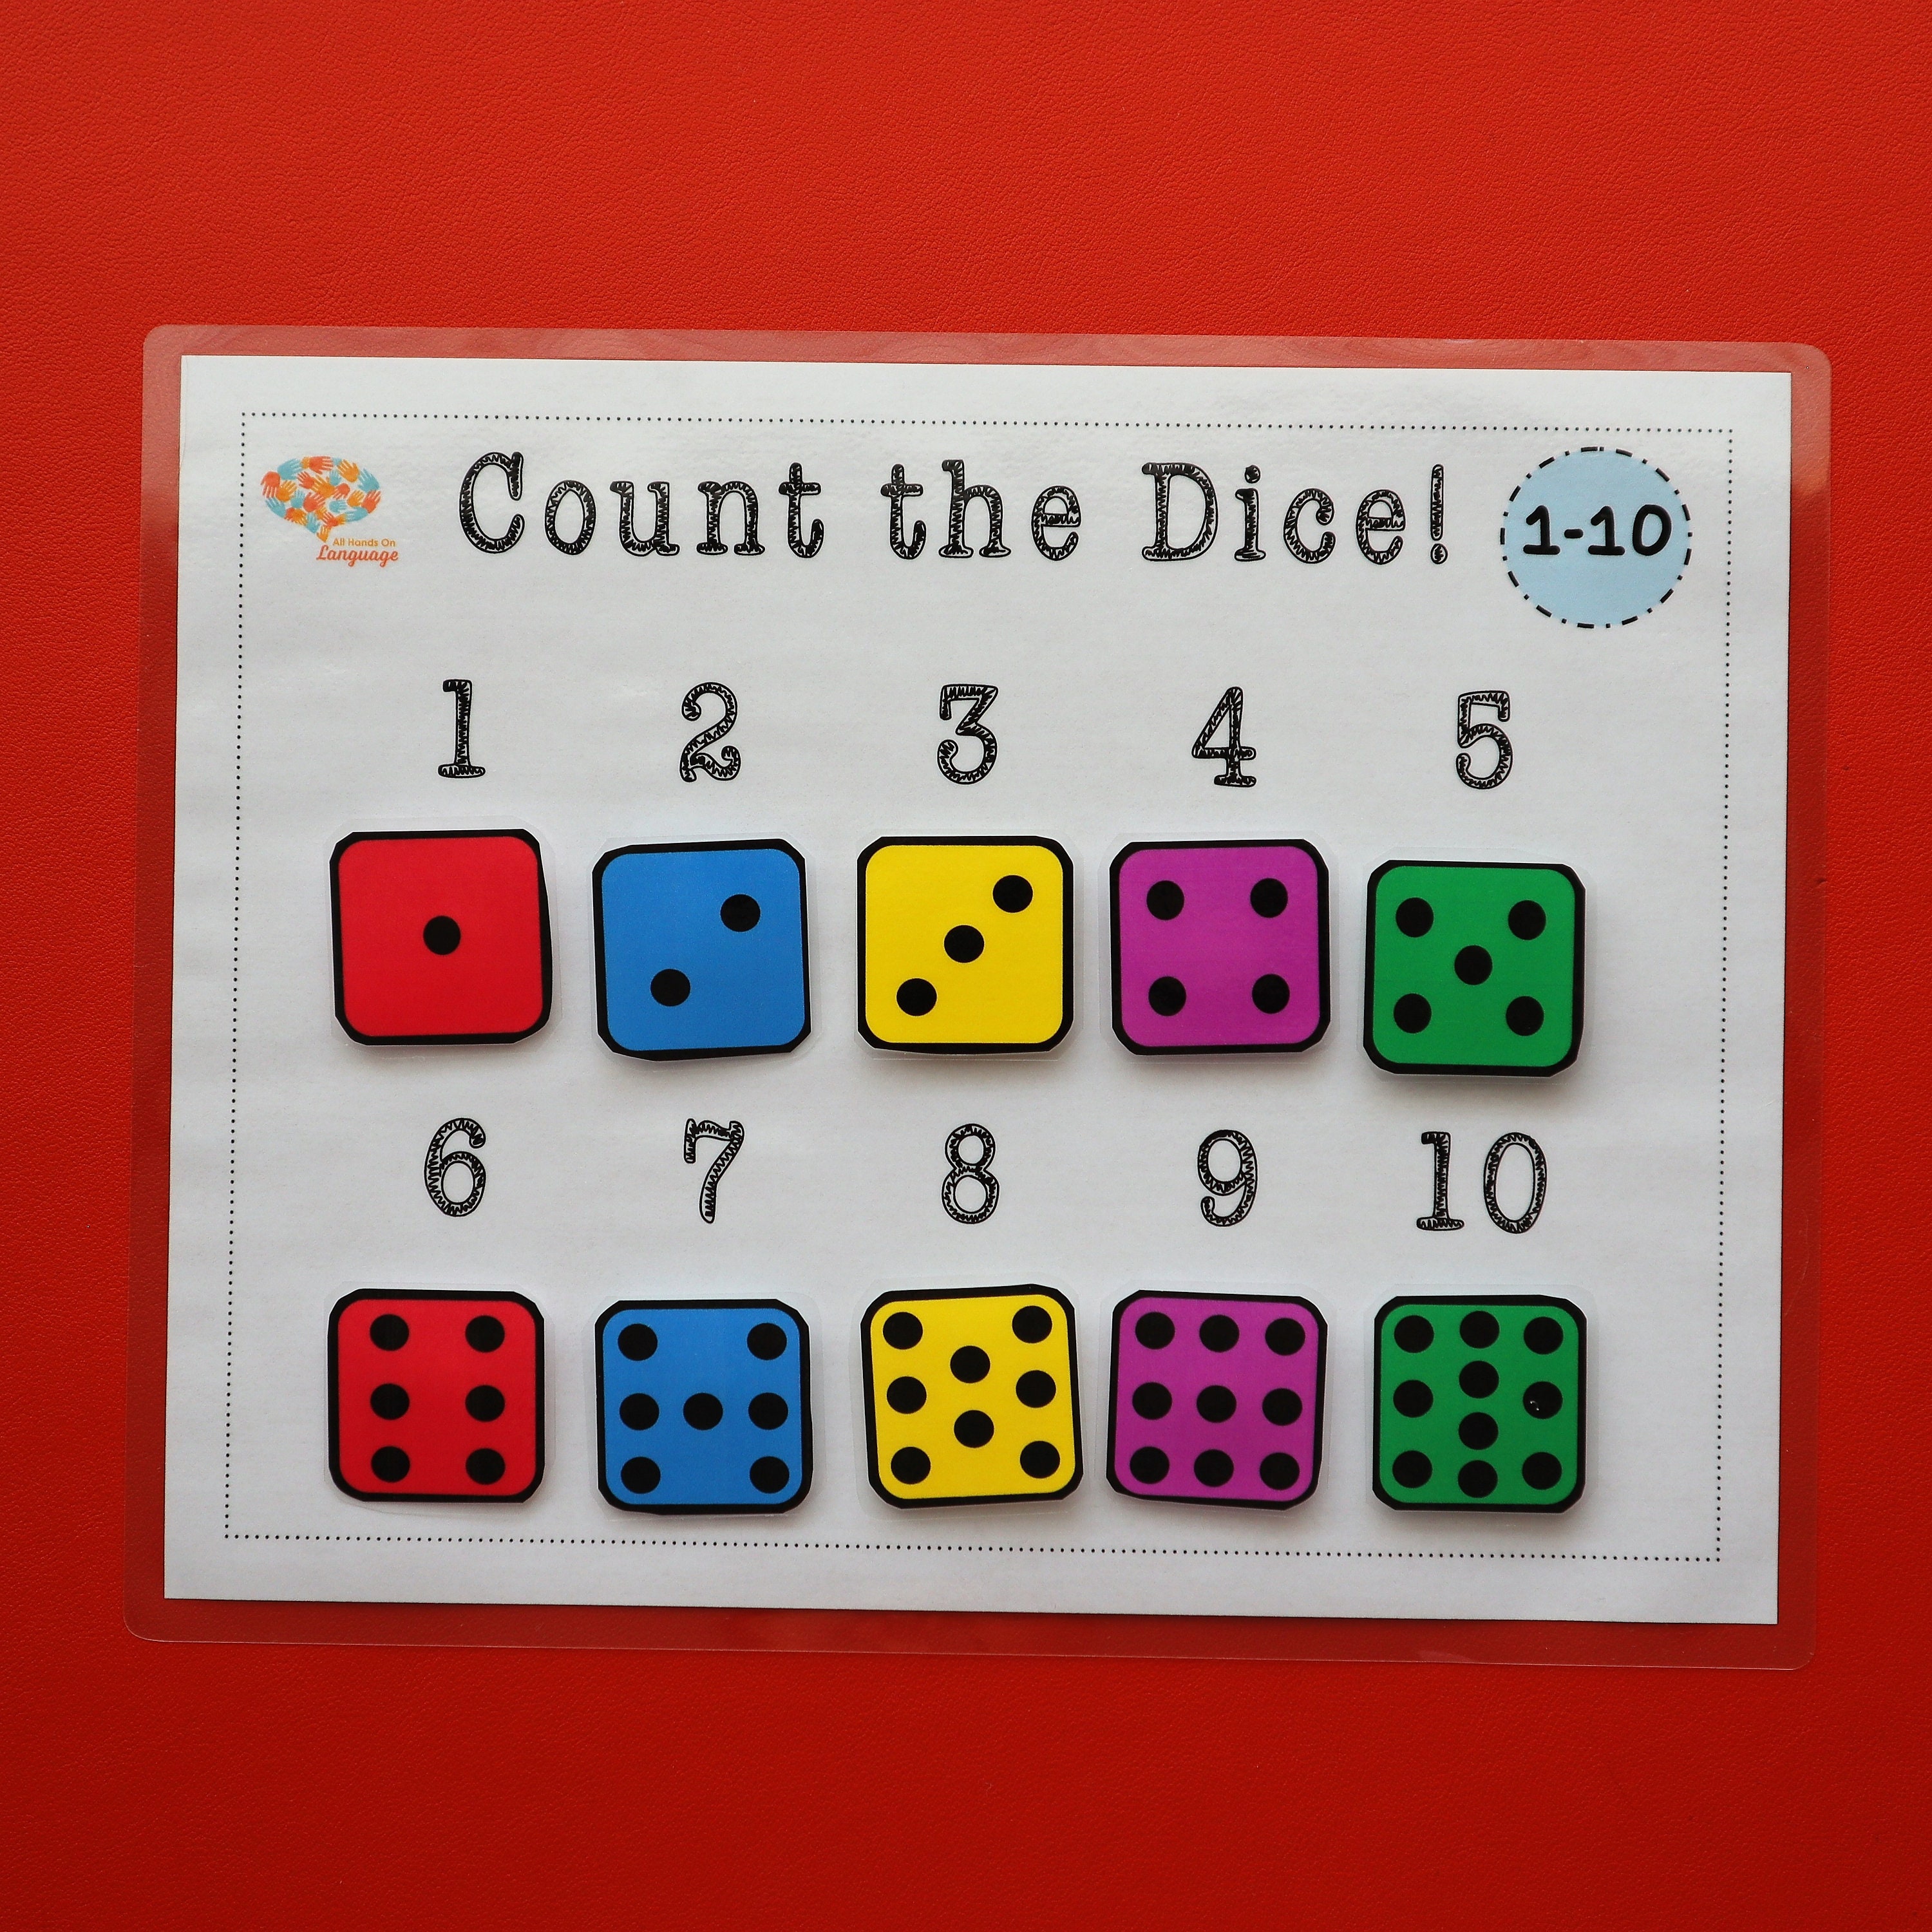 digital-dice-numbers-1-10-count-and-match-activity-count-dots-ubicaciondepersonas-cdmx-gob-mx